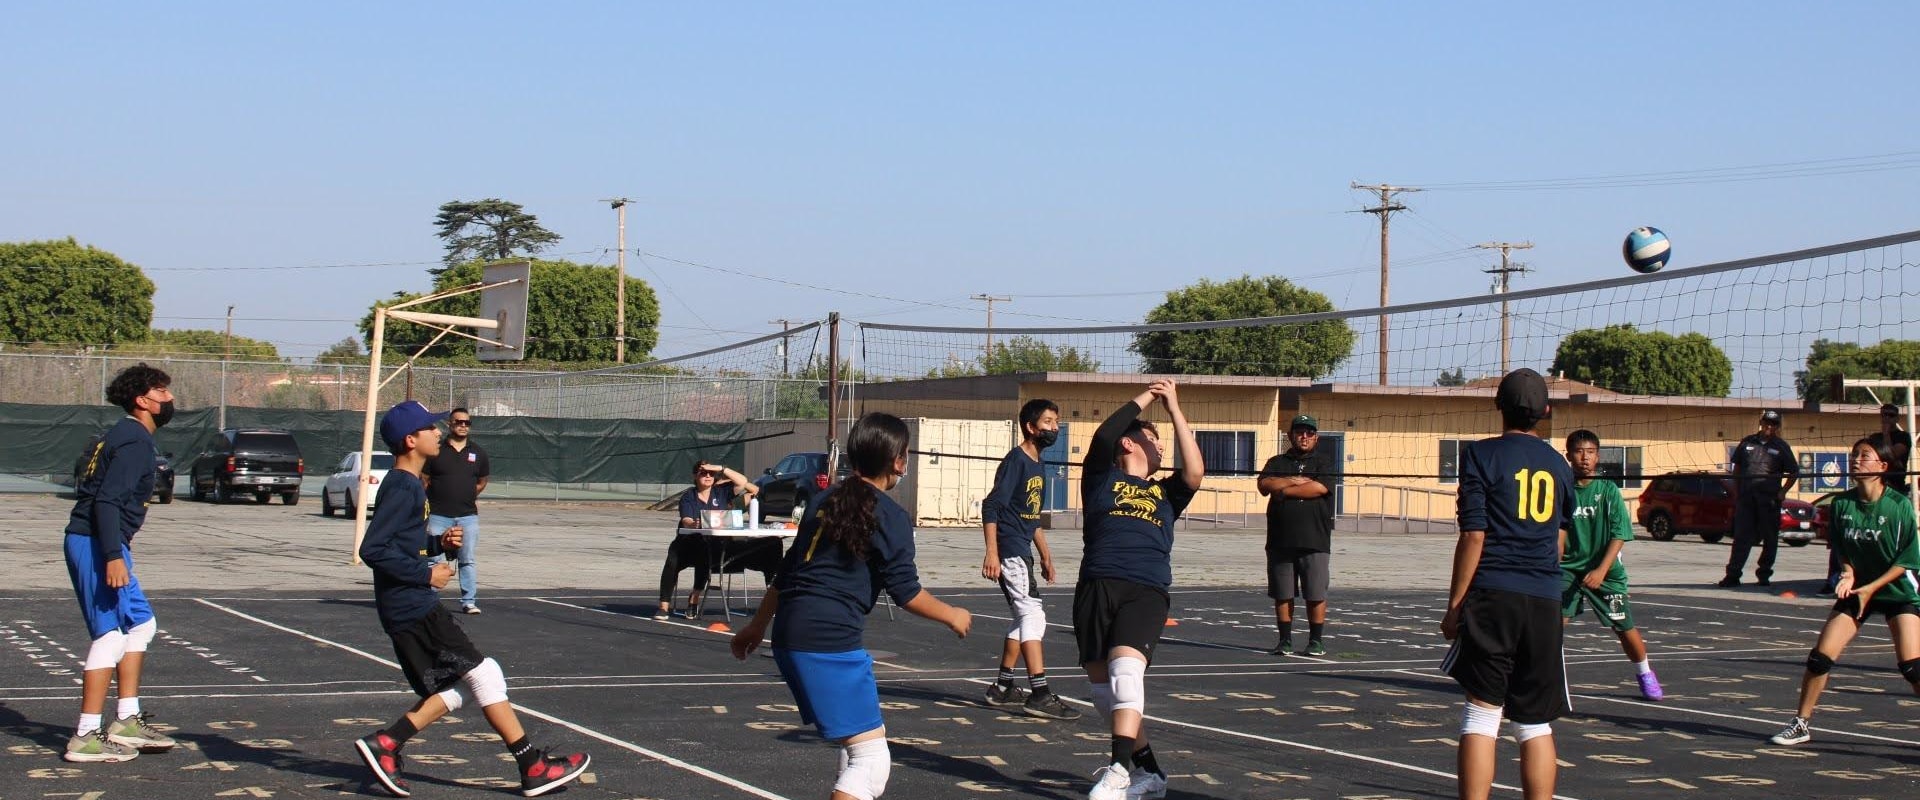 After-School Programs in Sacramento, California: Where to Start